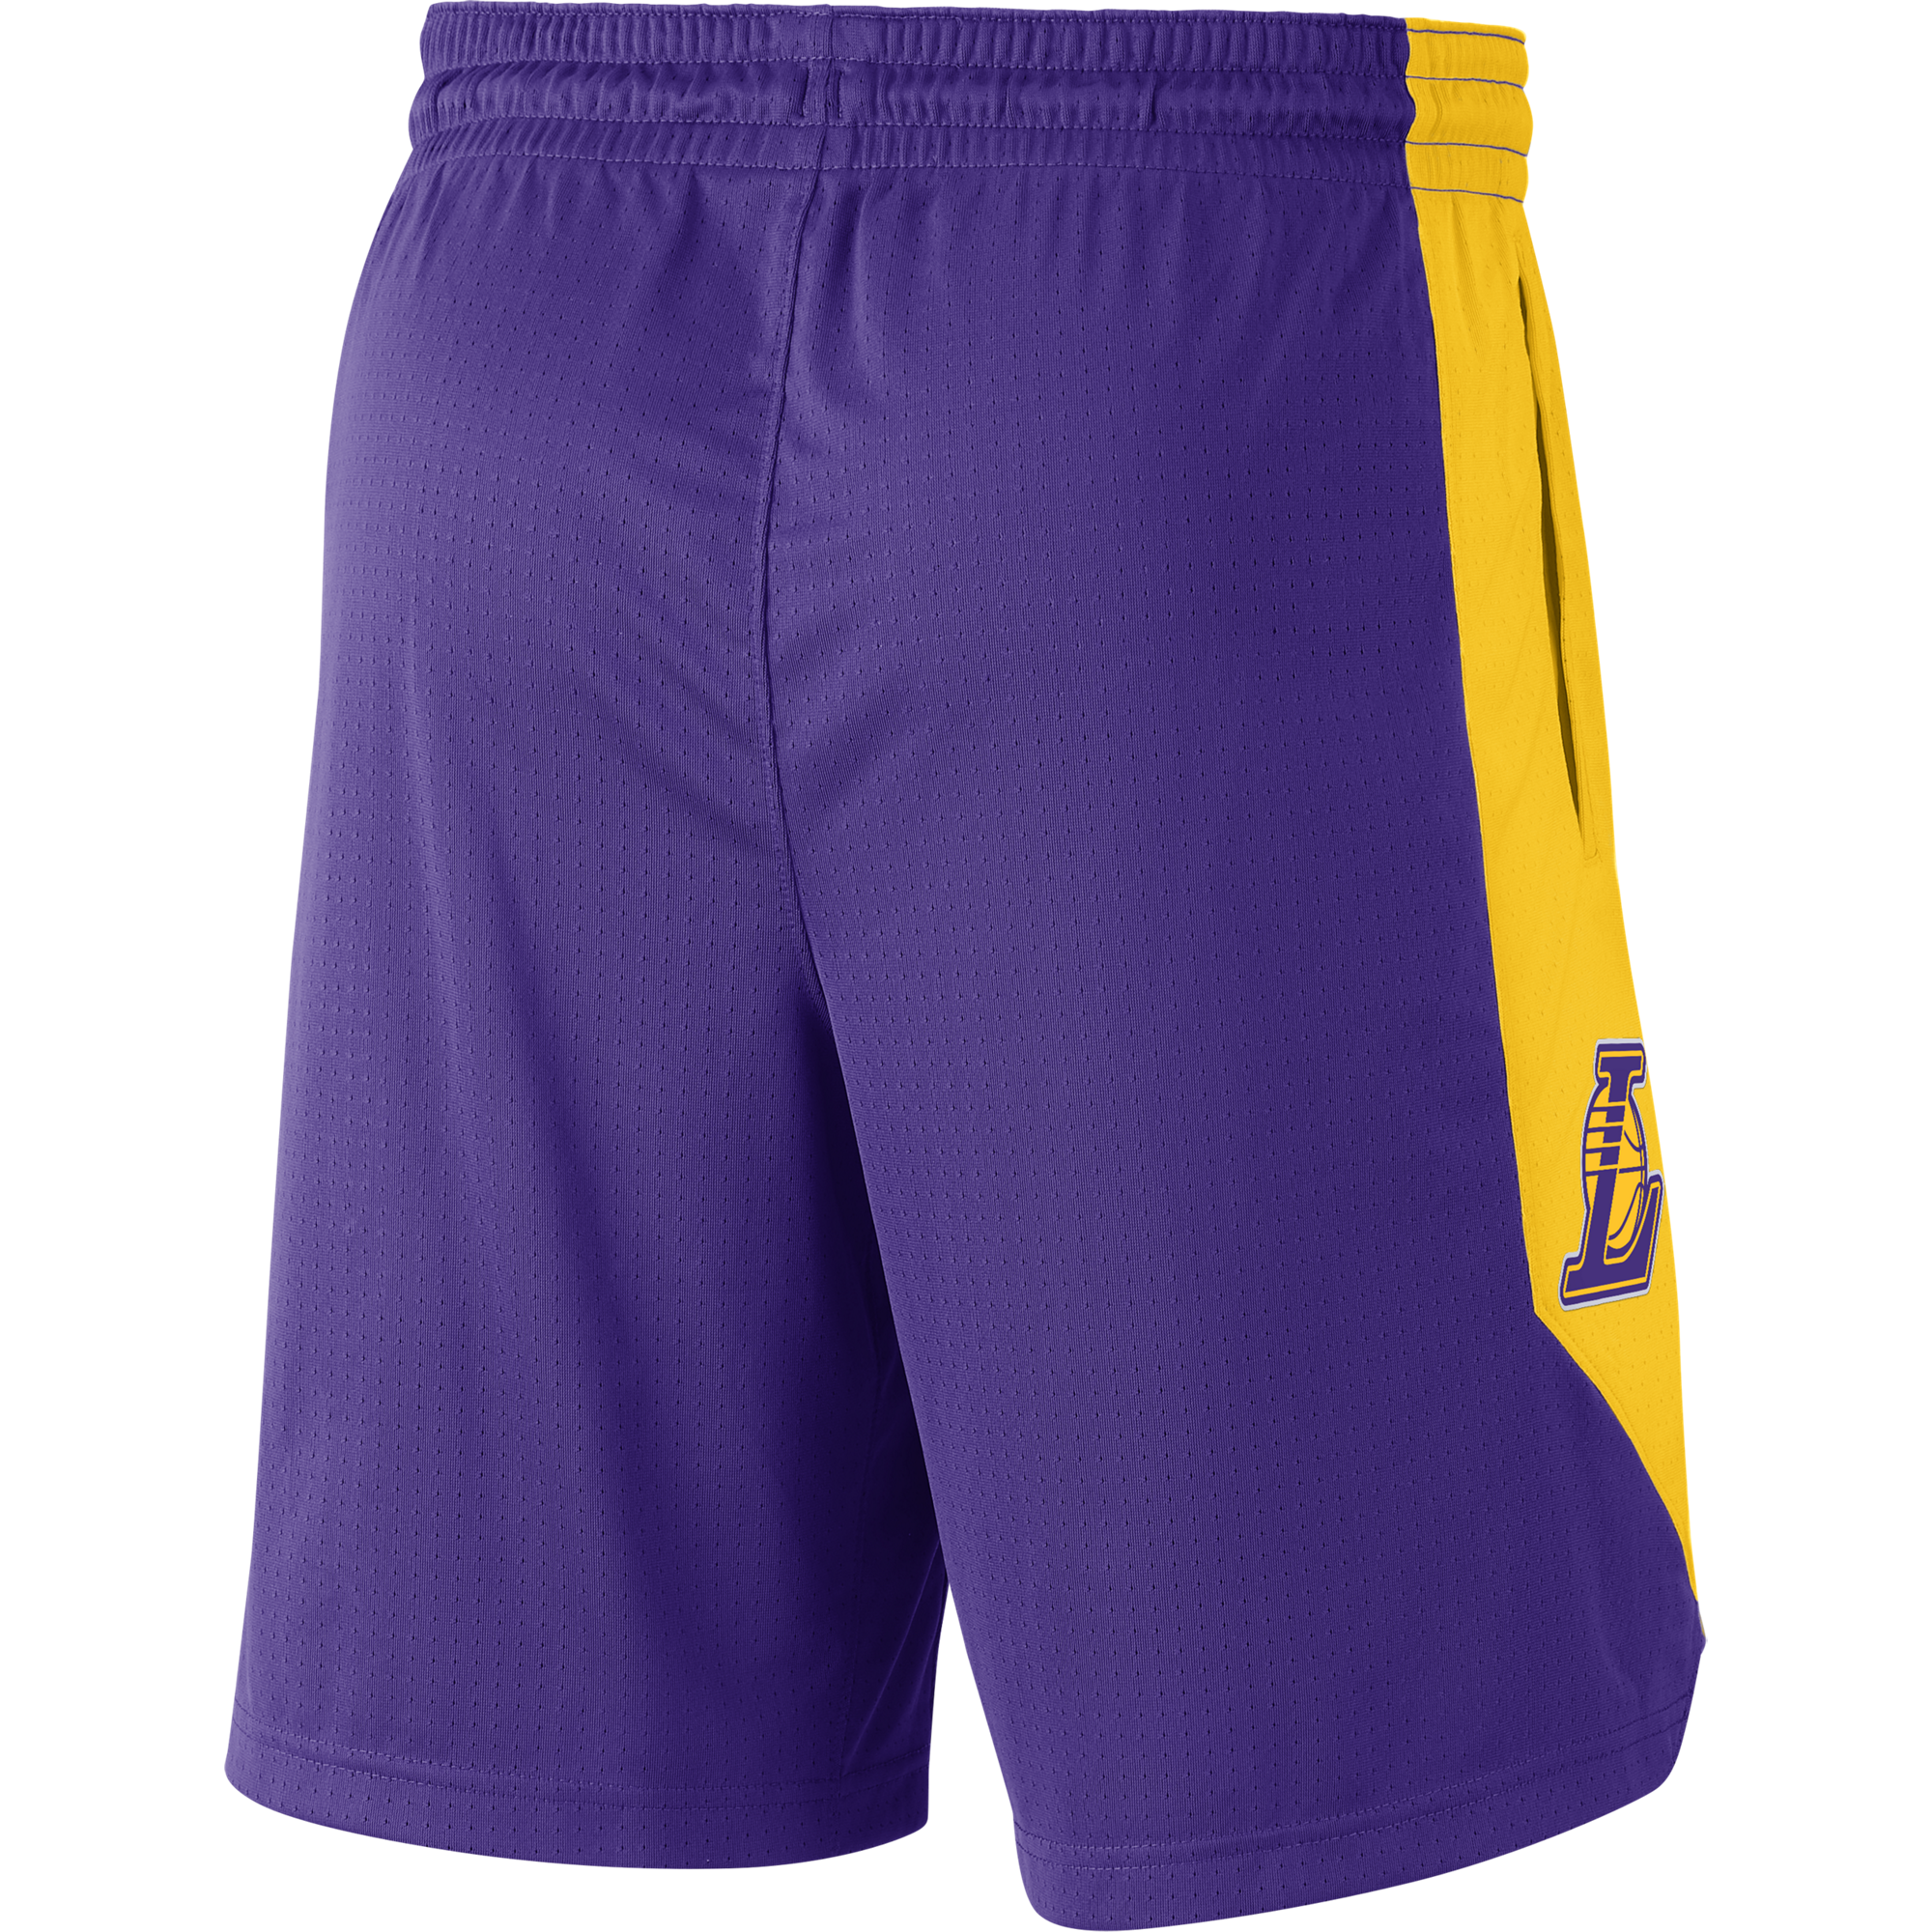 Los Angeles Lakers Nike Courtside Jogger - Field Purple - Mens